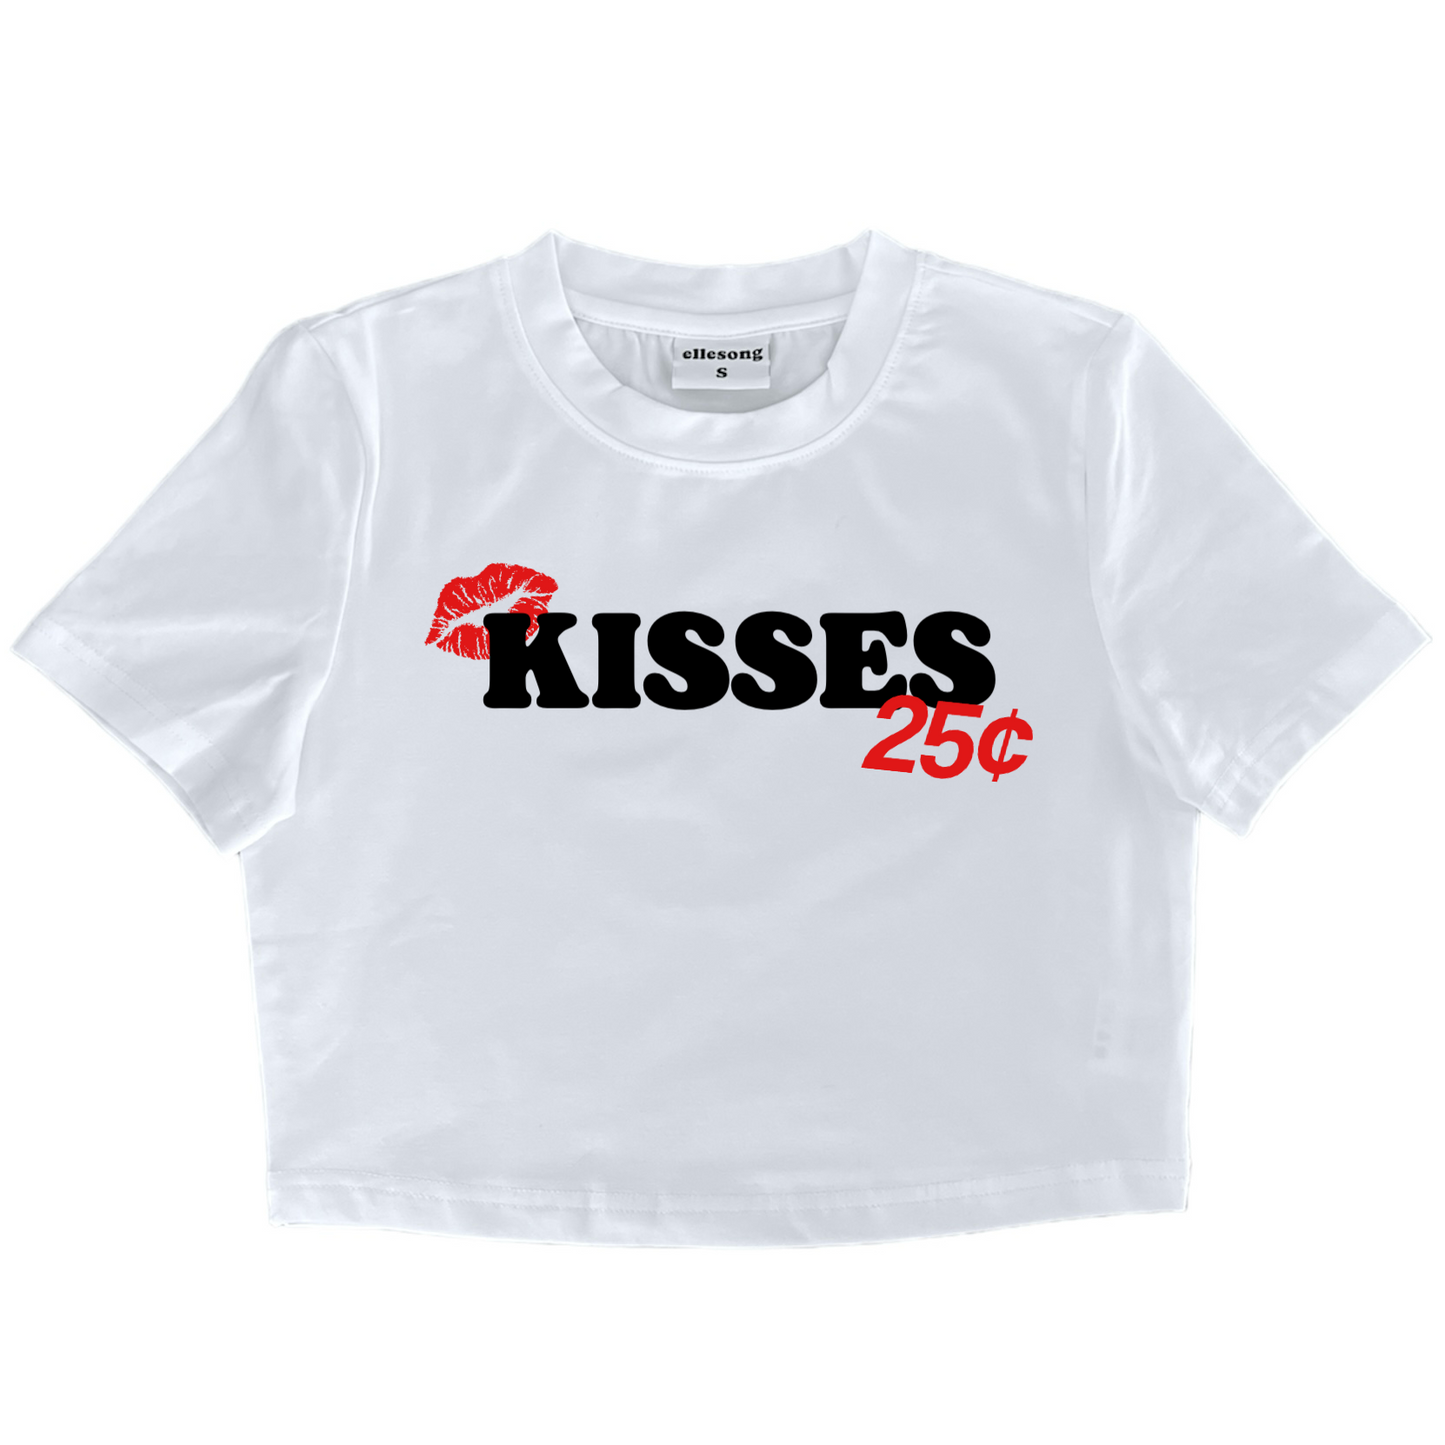 Kisses 25¢ Baby Tee